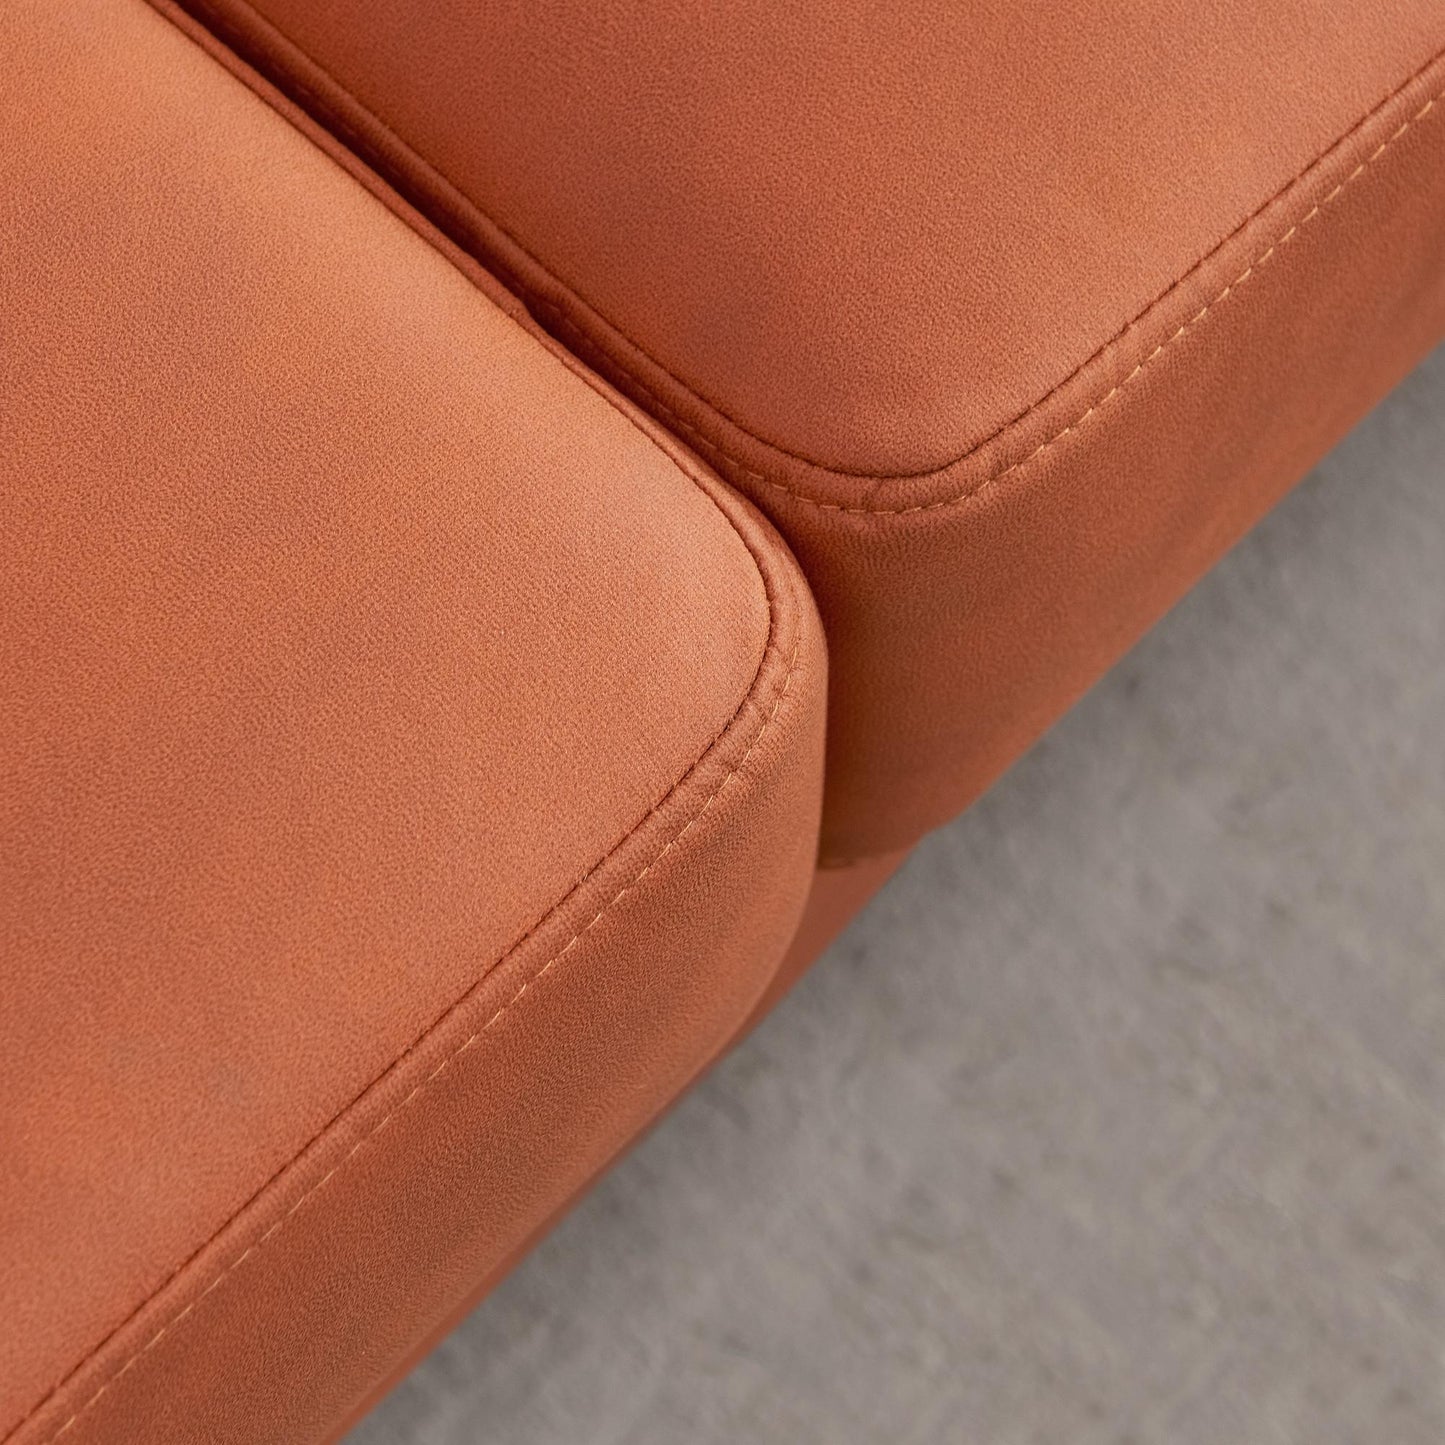 LAST™ Corner Sectional Technical Leather Sofa